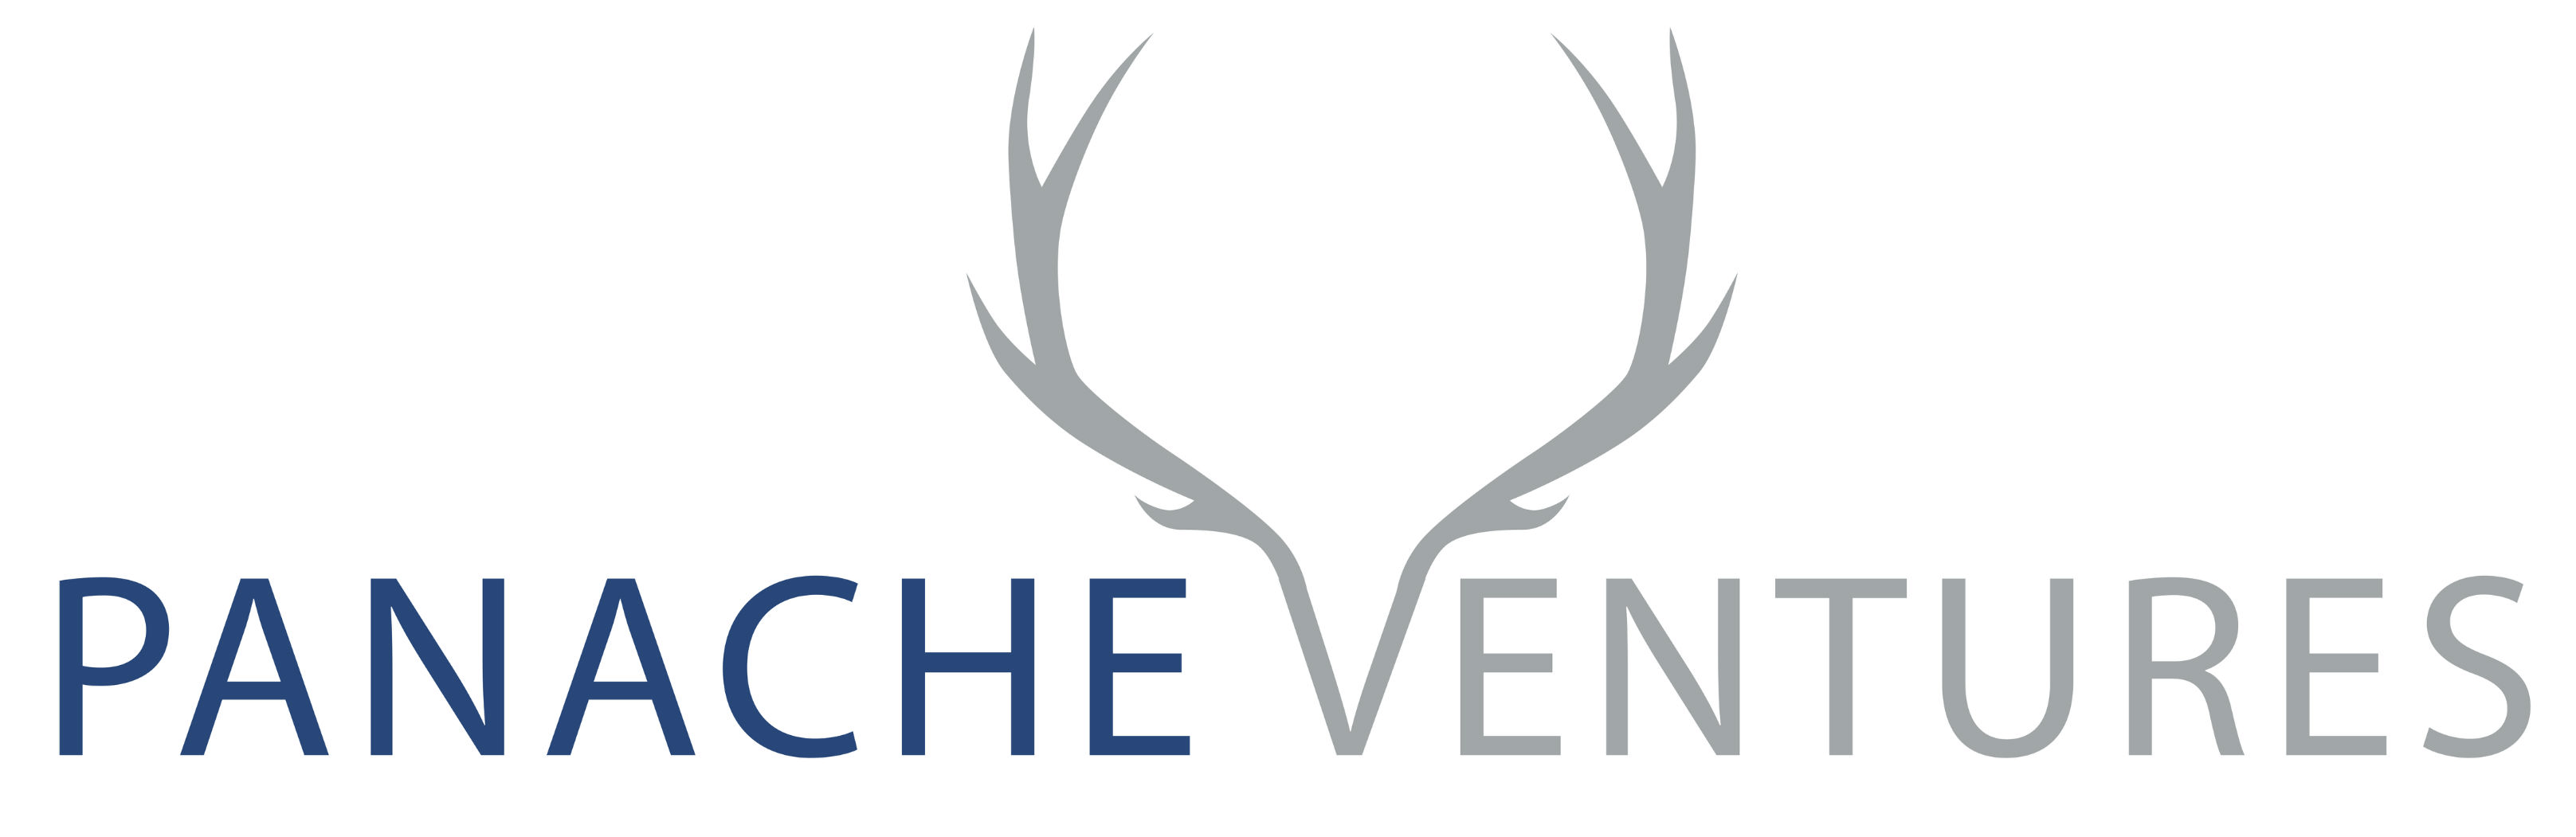 Panache Ventures logo